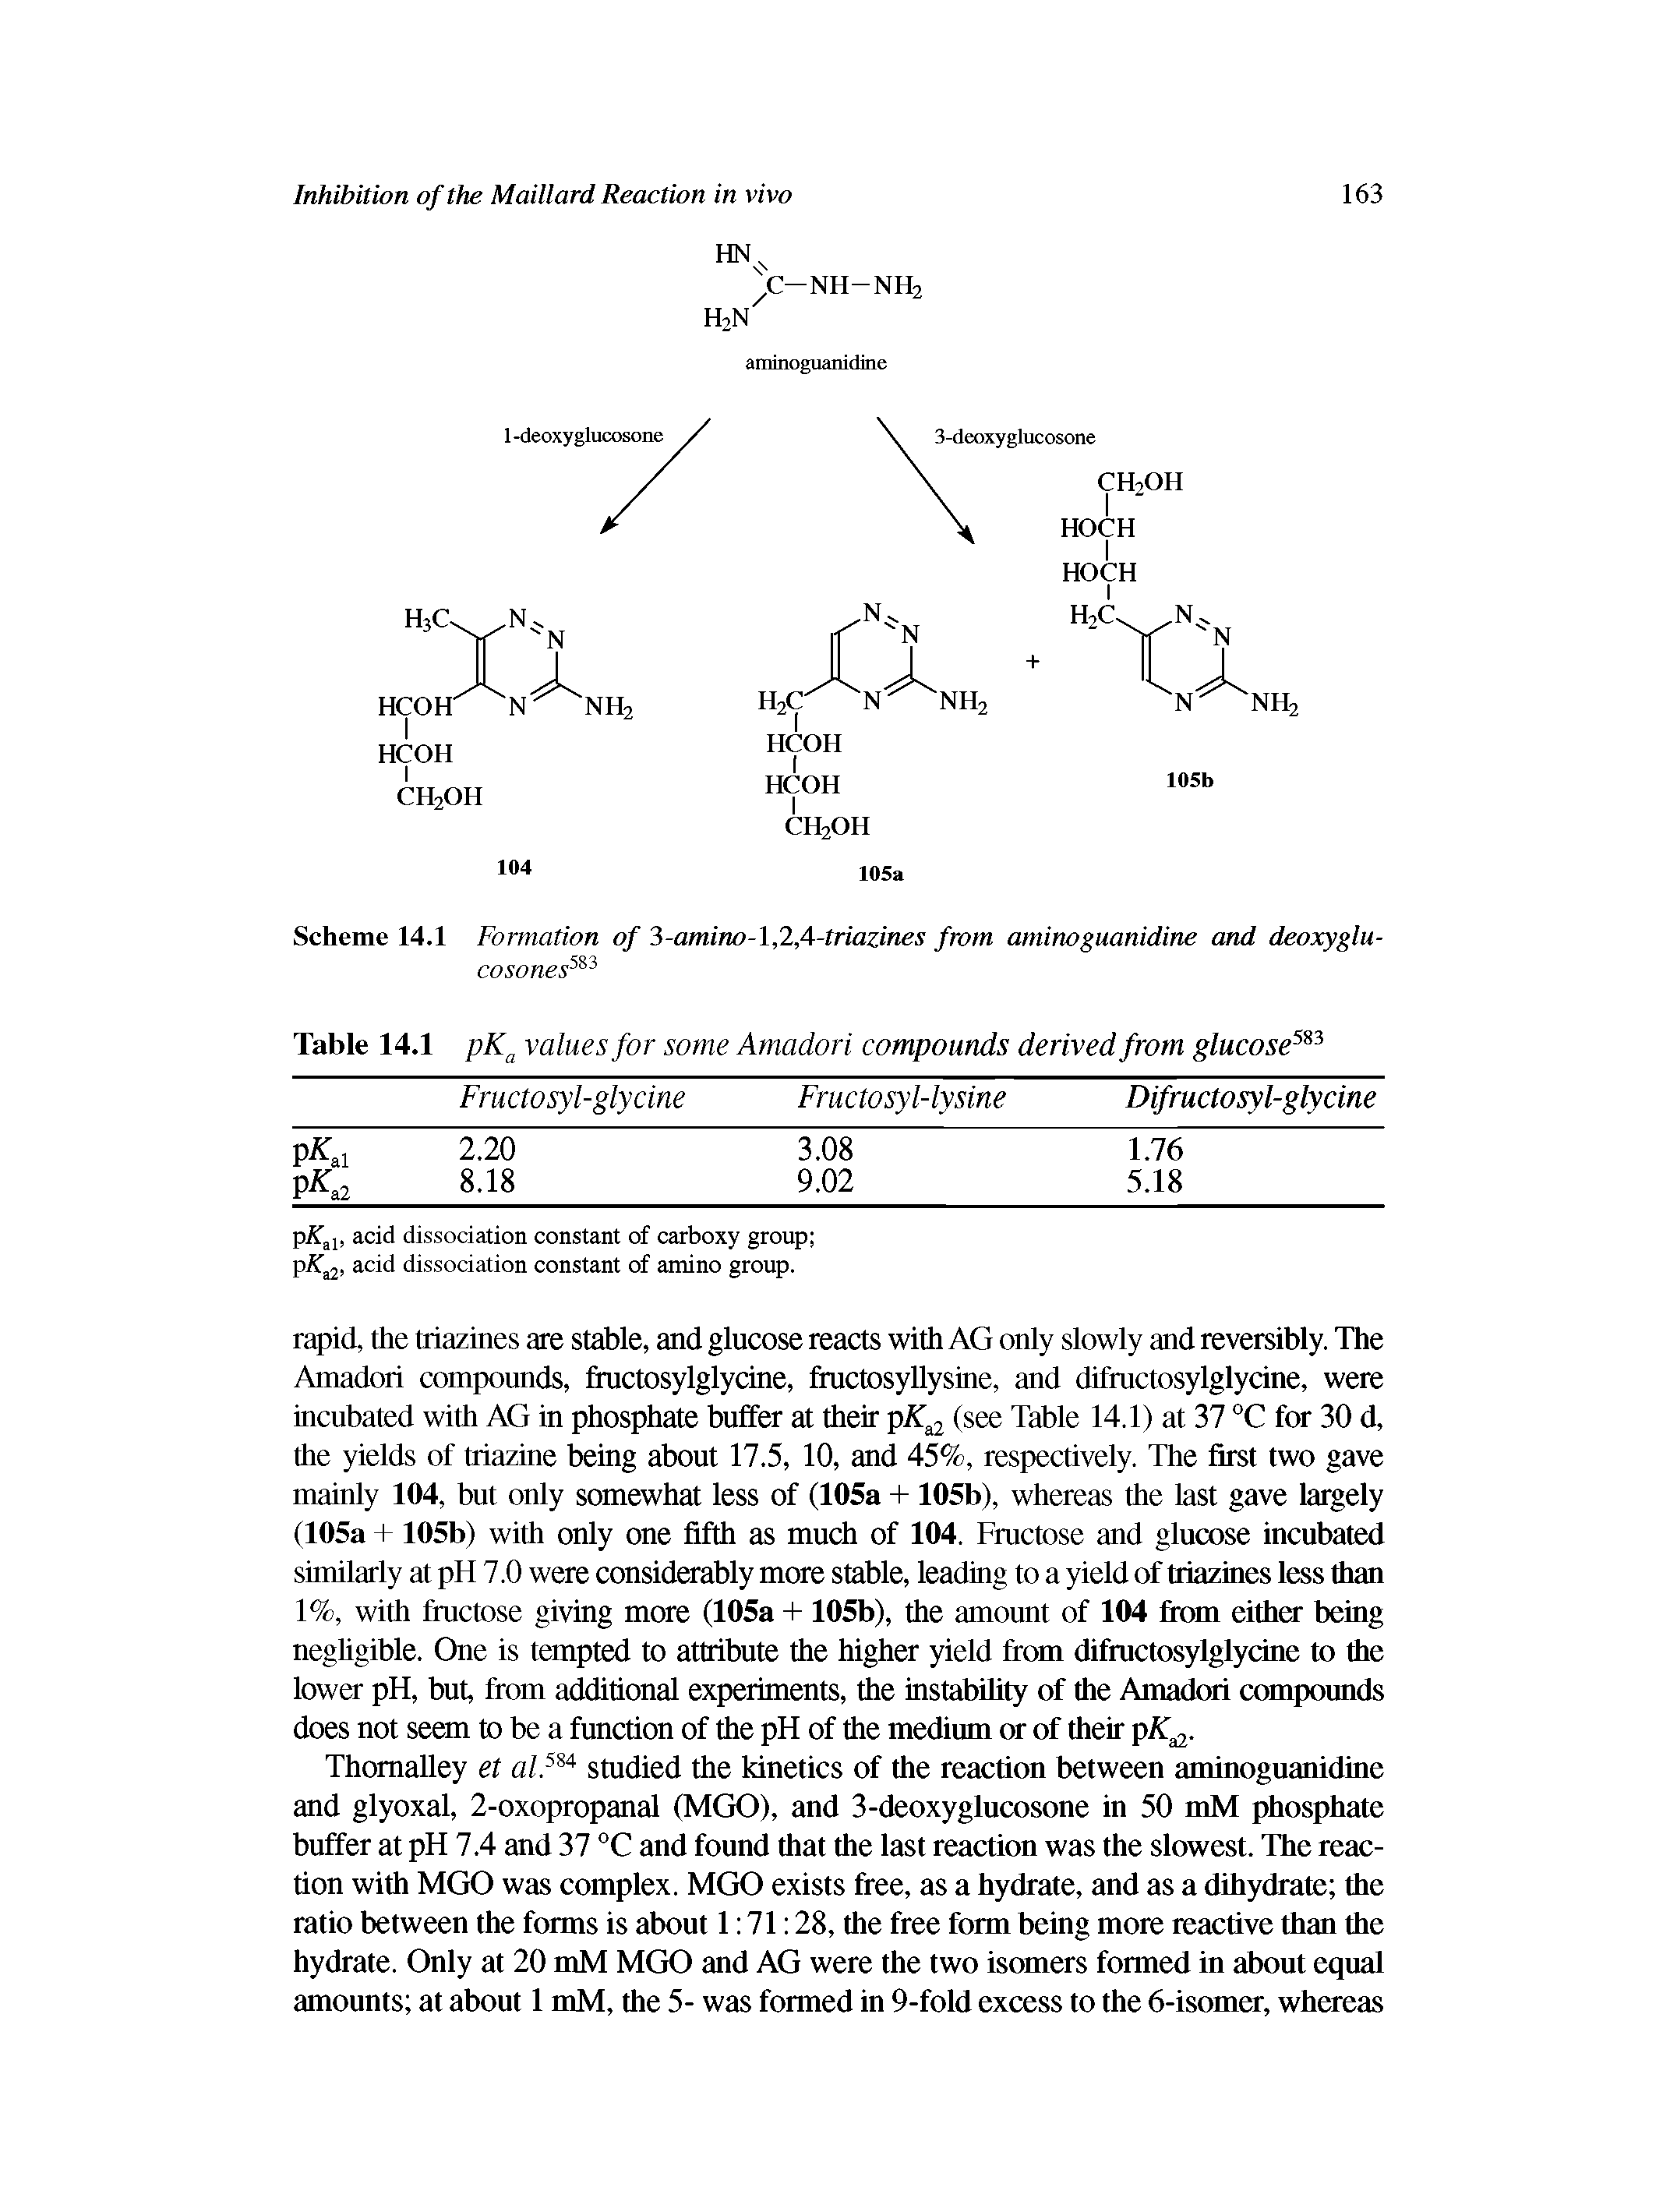 Scheme 14.1 Formation of 3-amino-1,2,4-triazines from aminoguanidine and deoxyglu-...